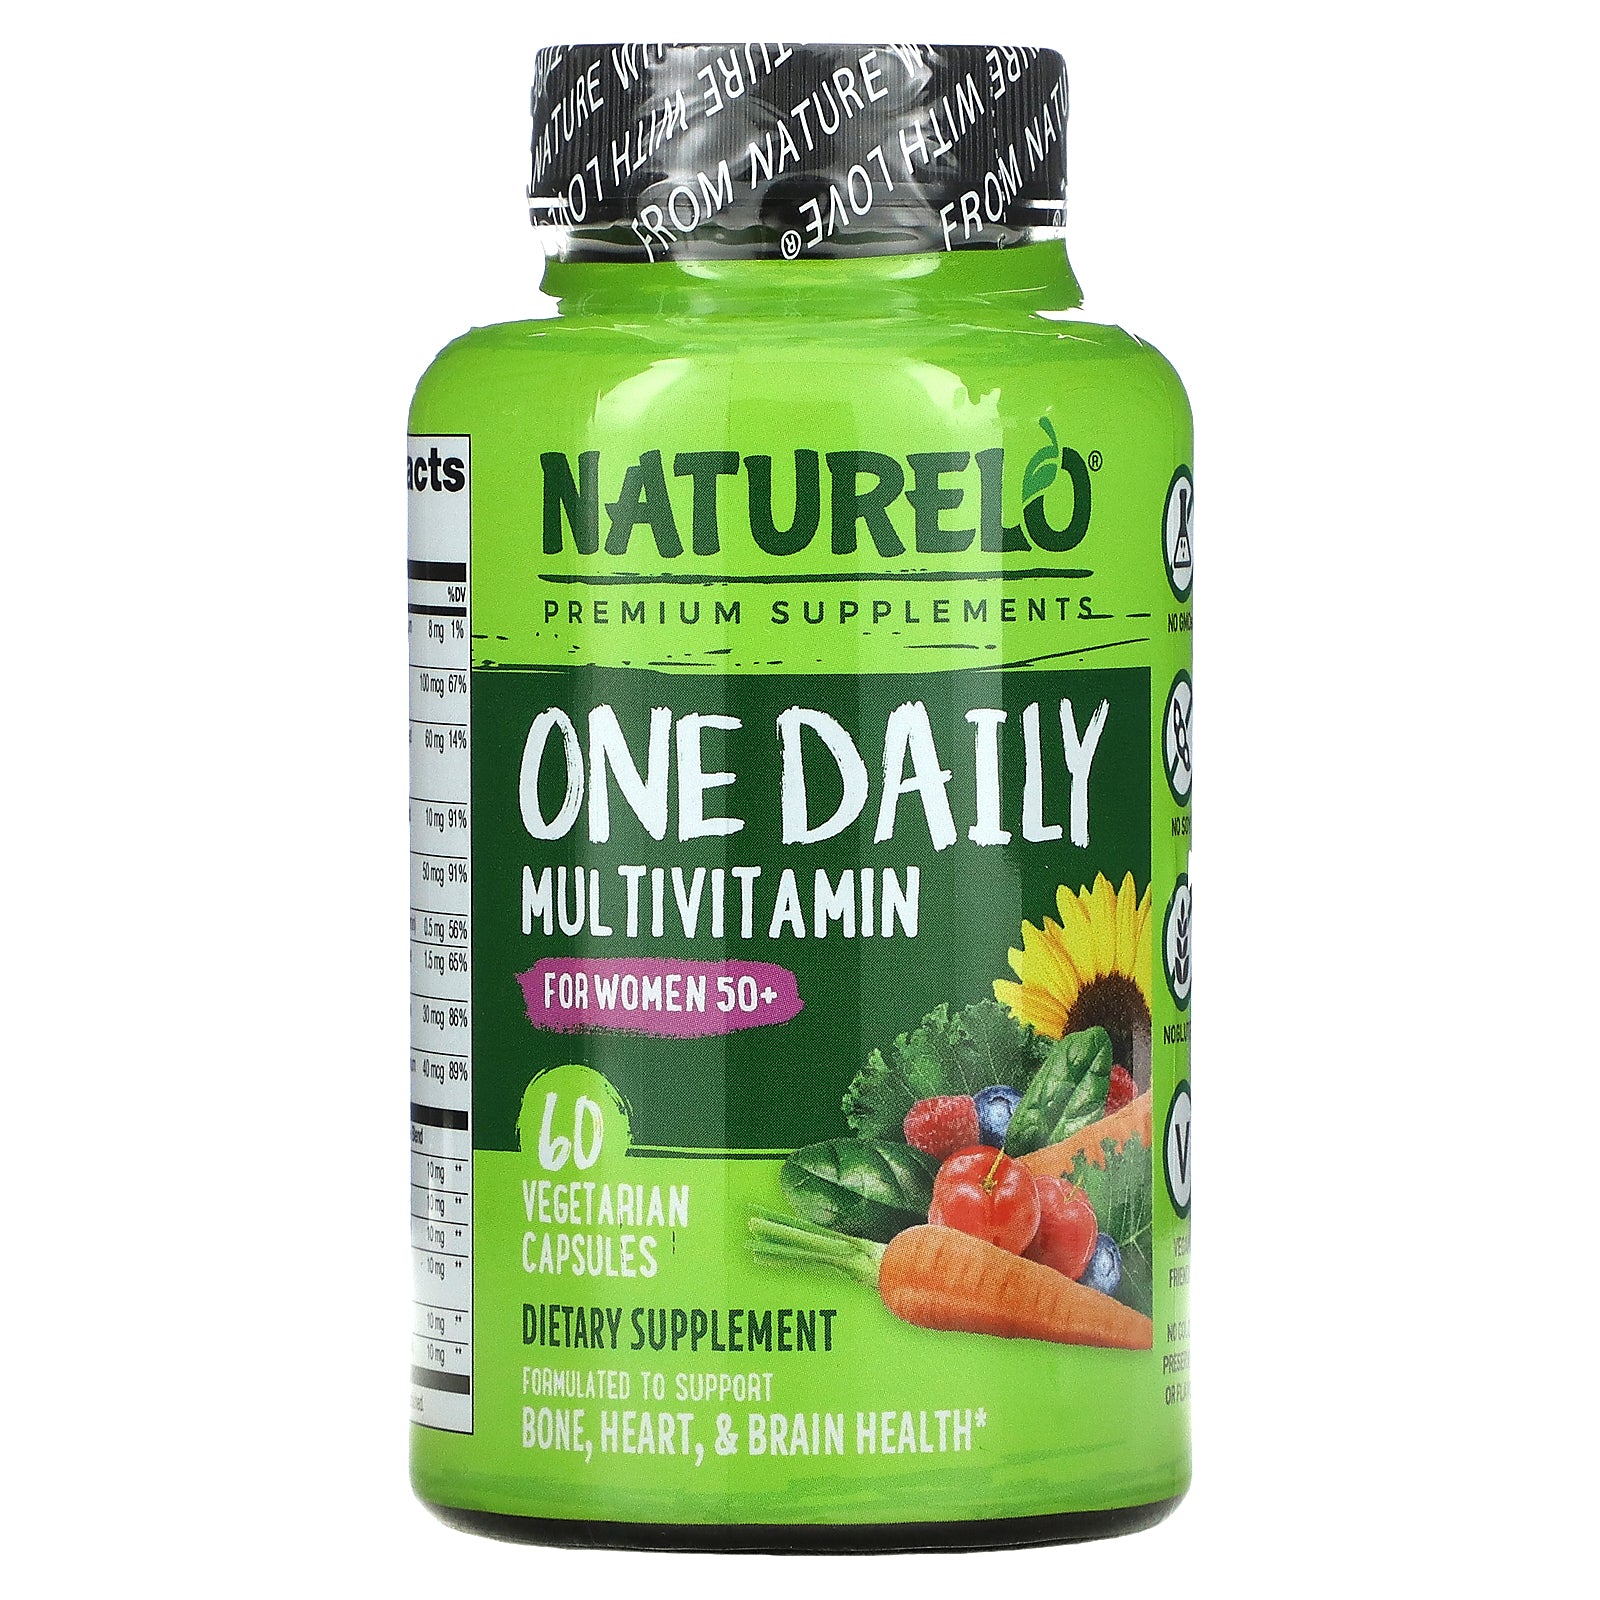 NATURELO, One Daily Multivitamin for Women 50+ Vegetarian Capsules